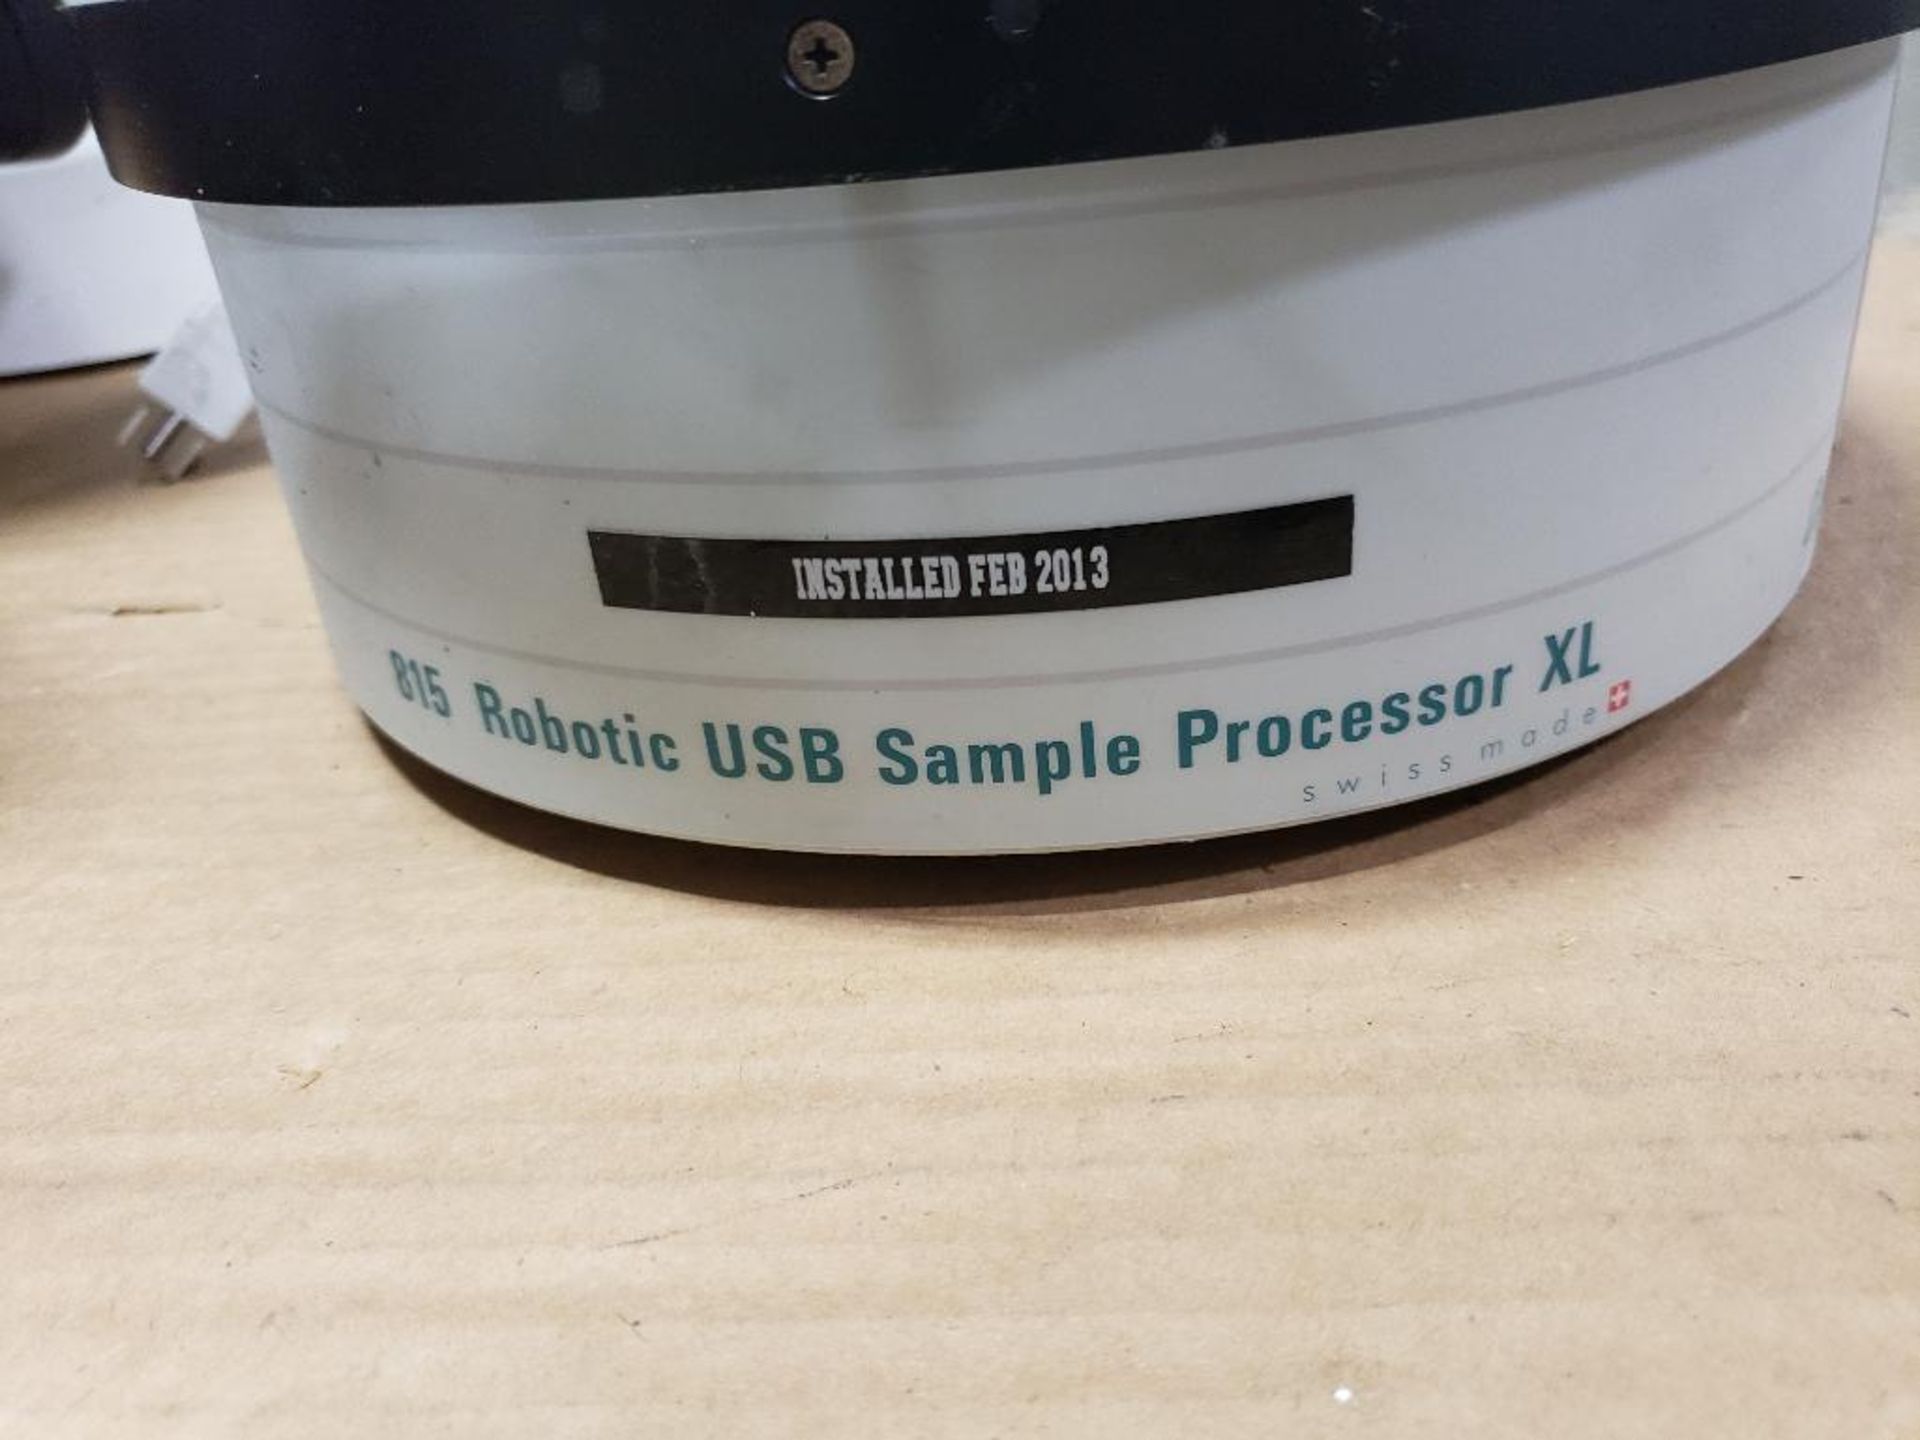 Swissmade 815 Robotic USB sample processer XL. - Image 3 of 8